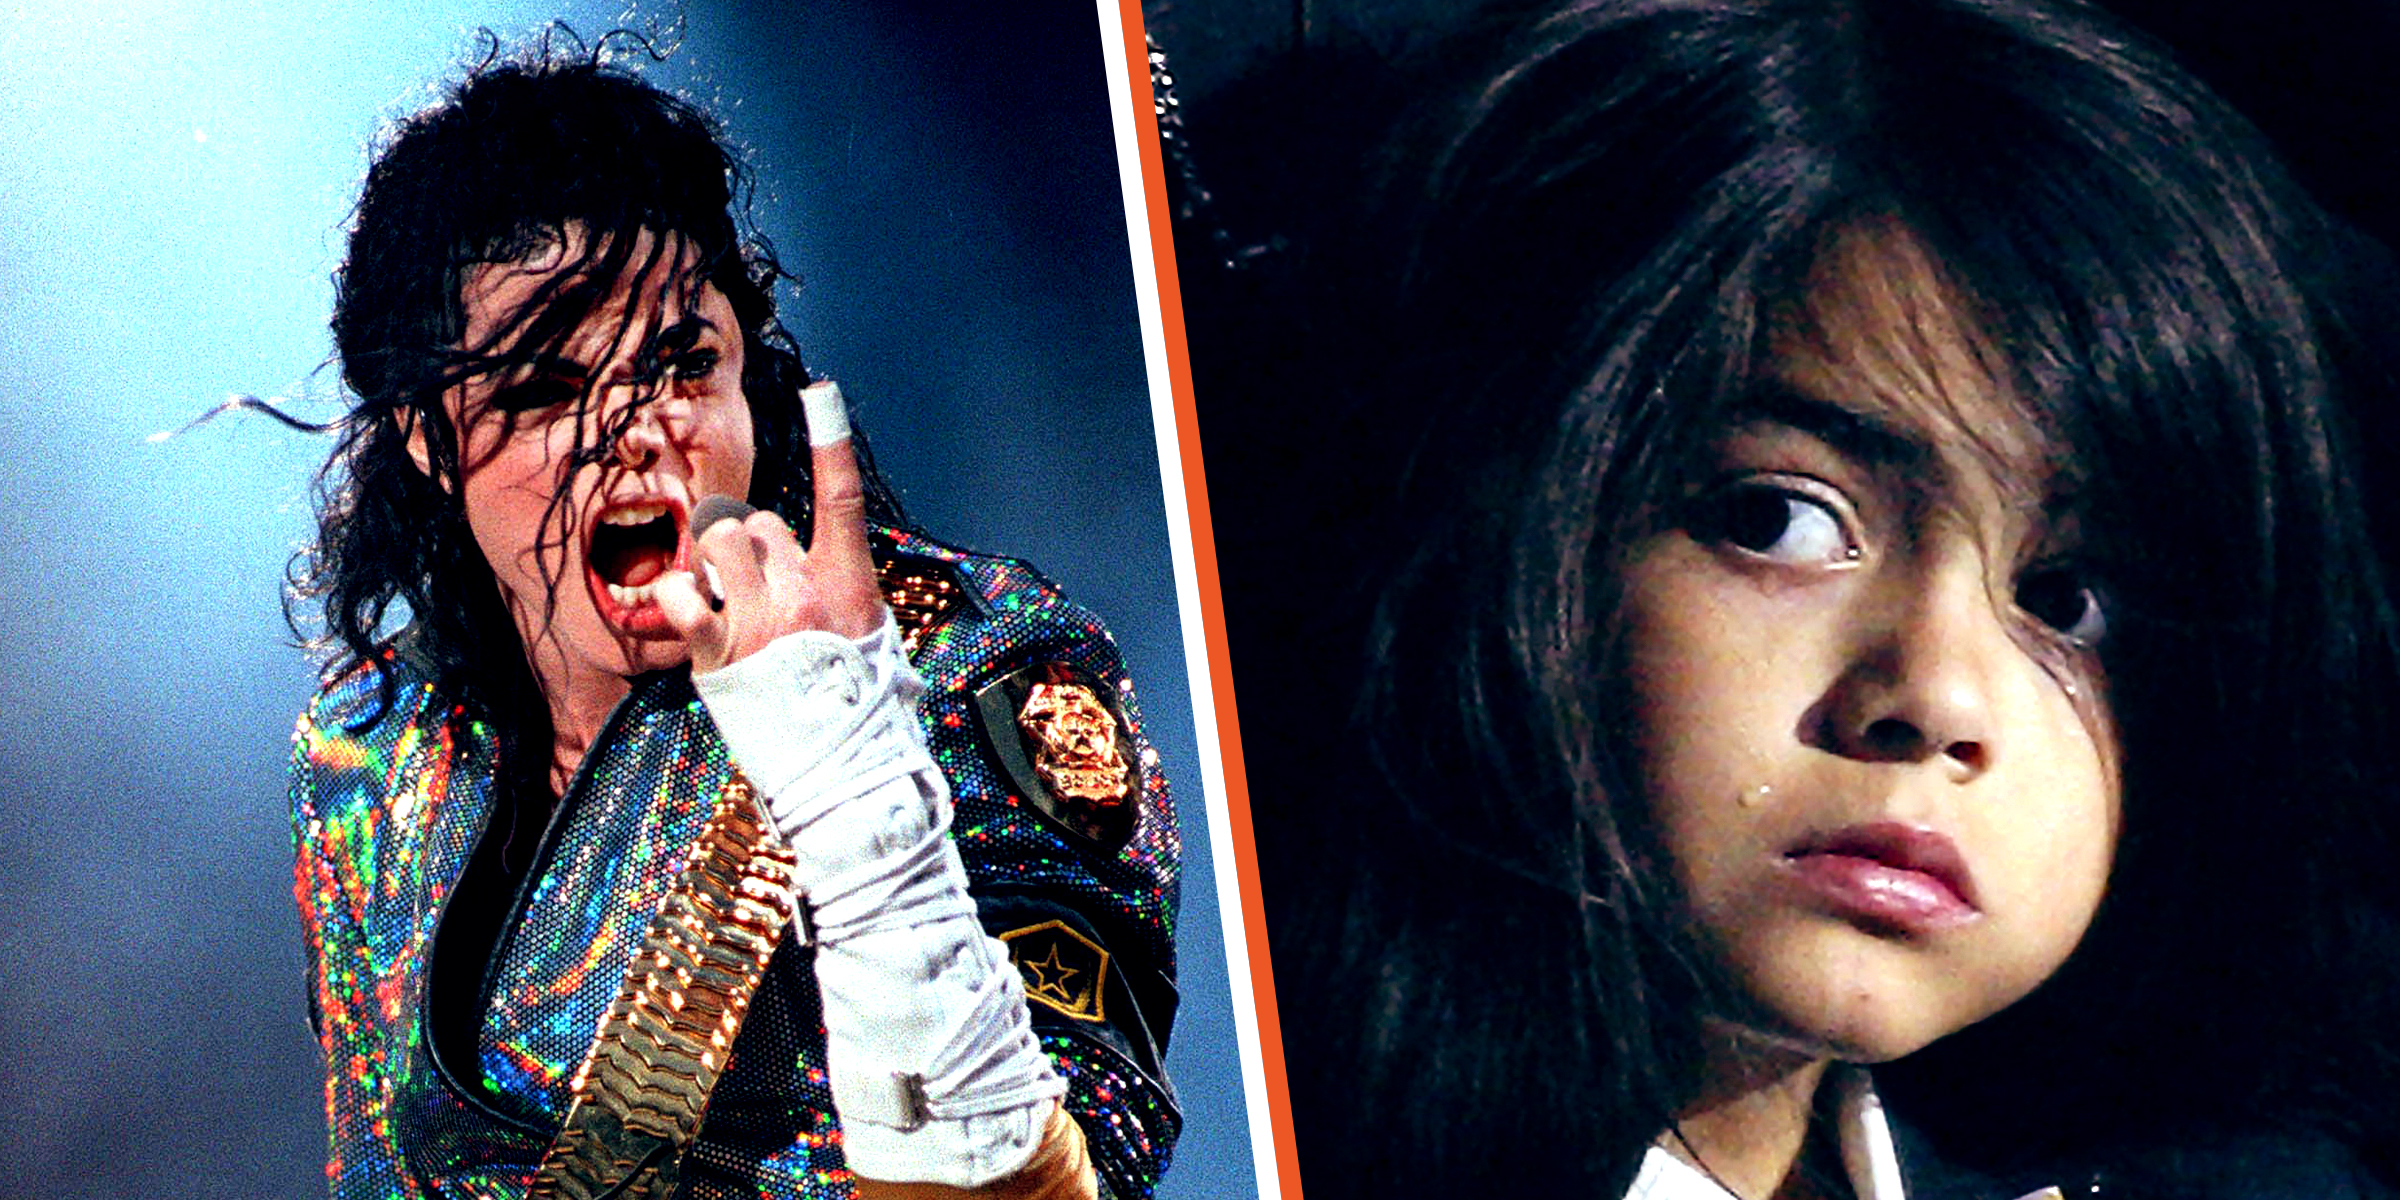 Michael Jackson | Blanket "Bigi" Jackson | Source : Getty Images